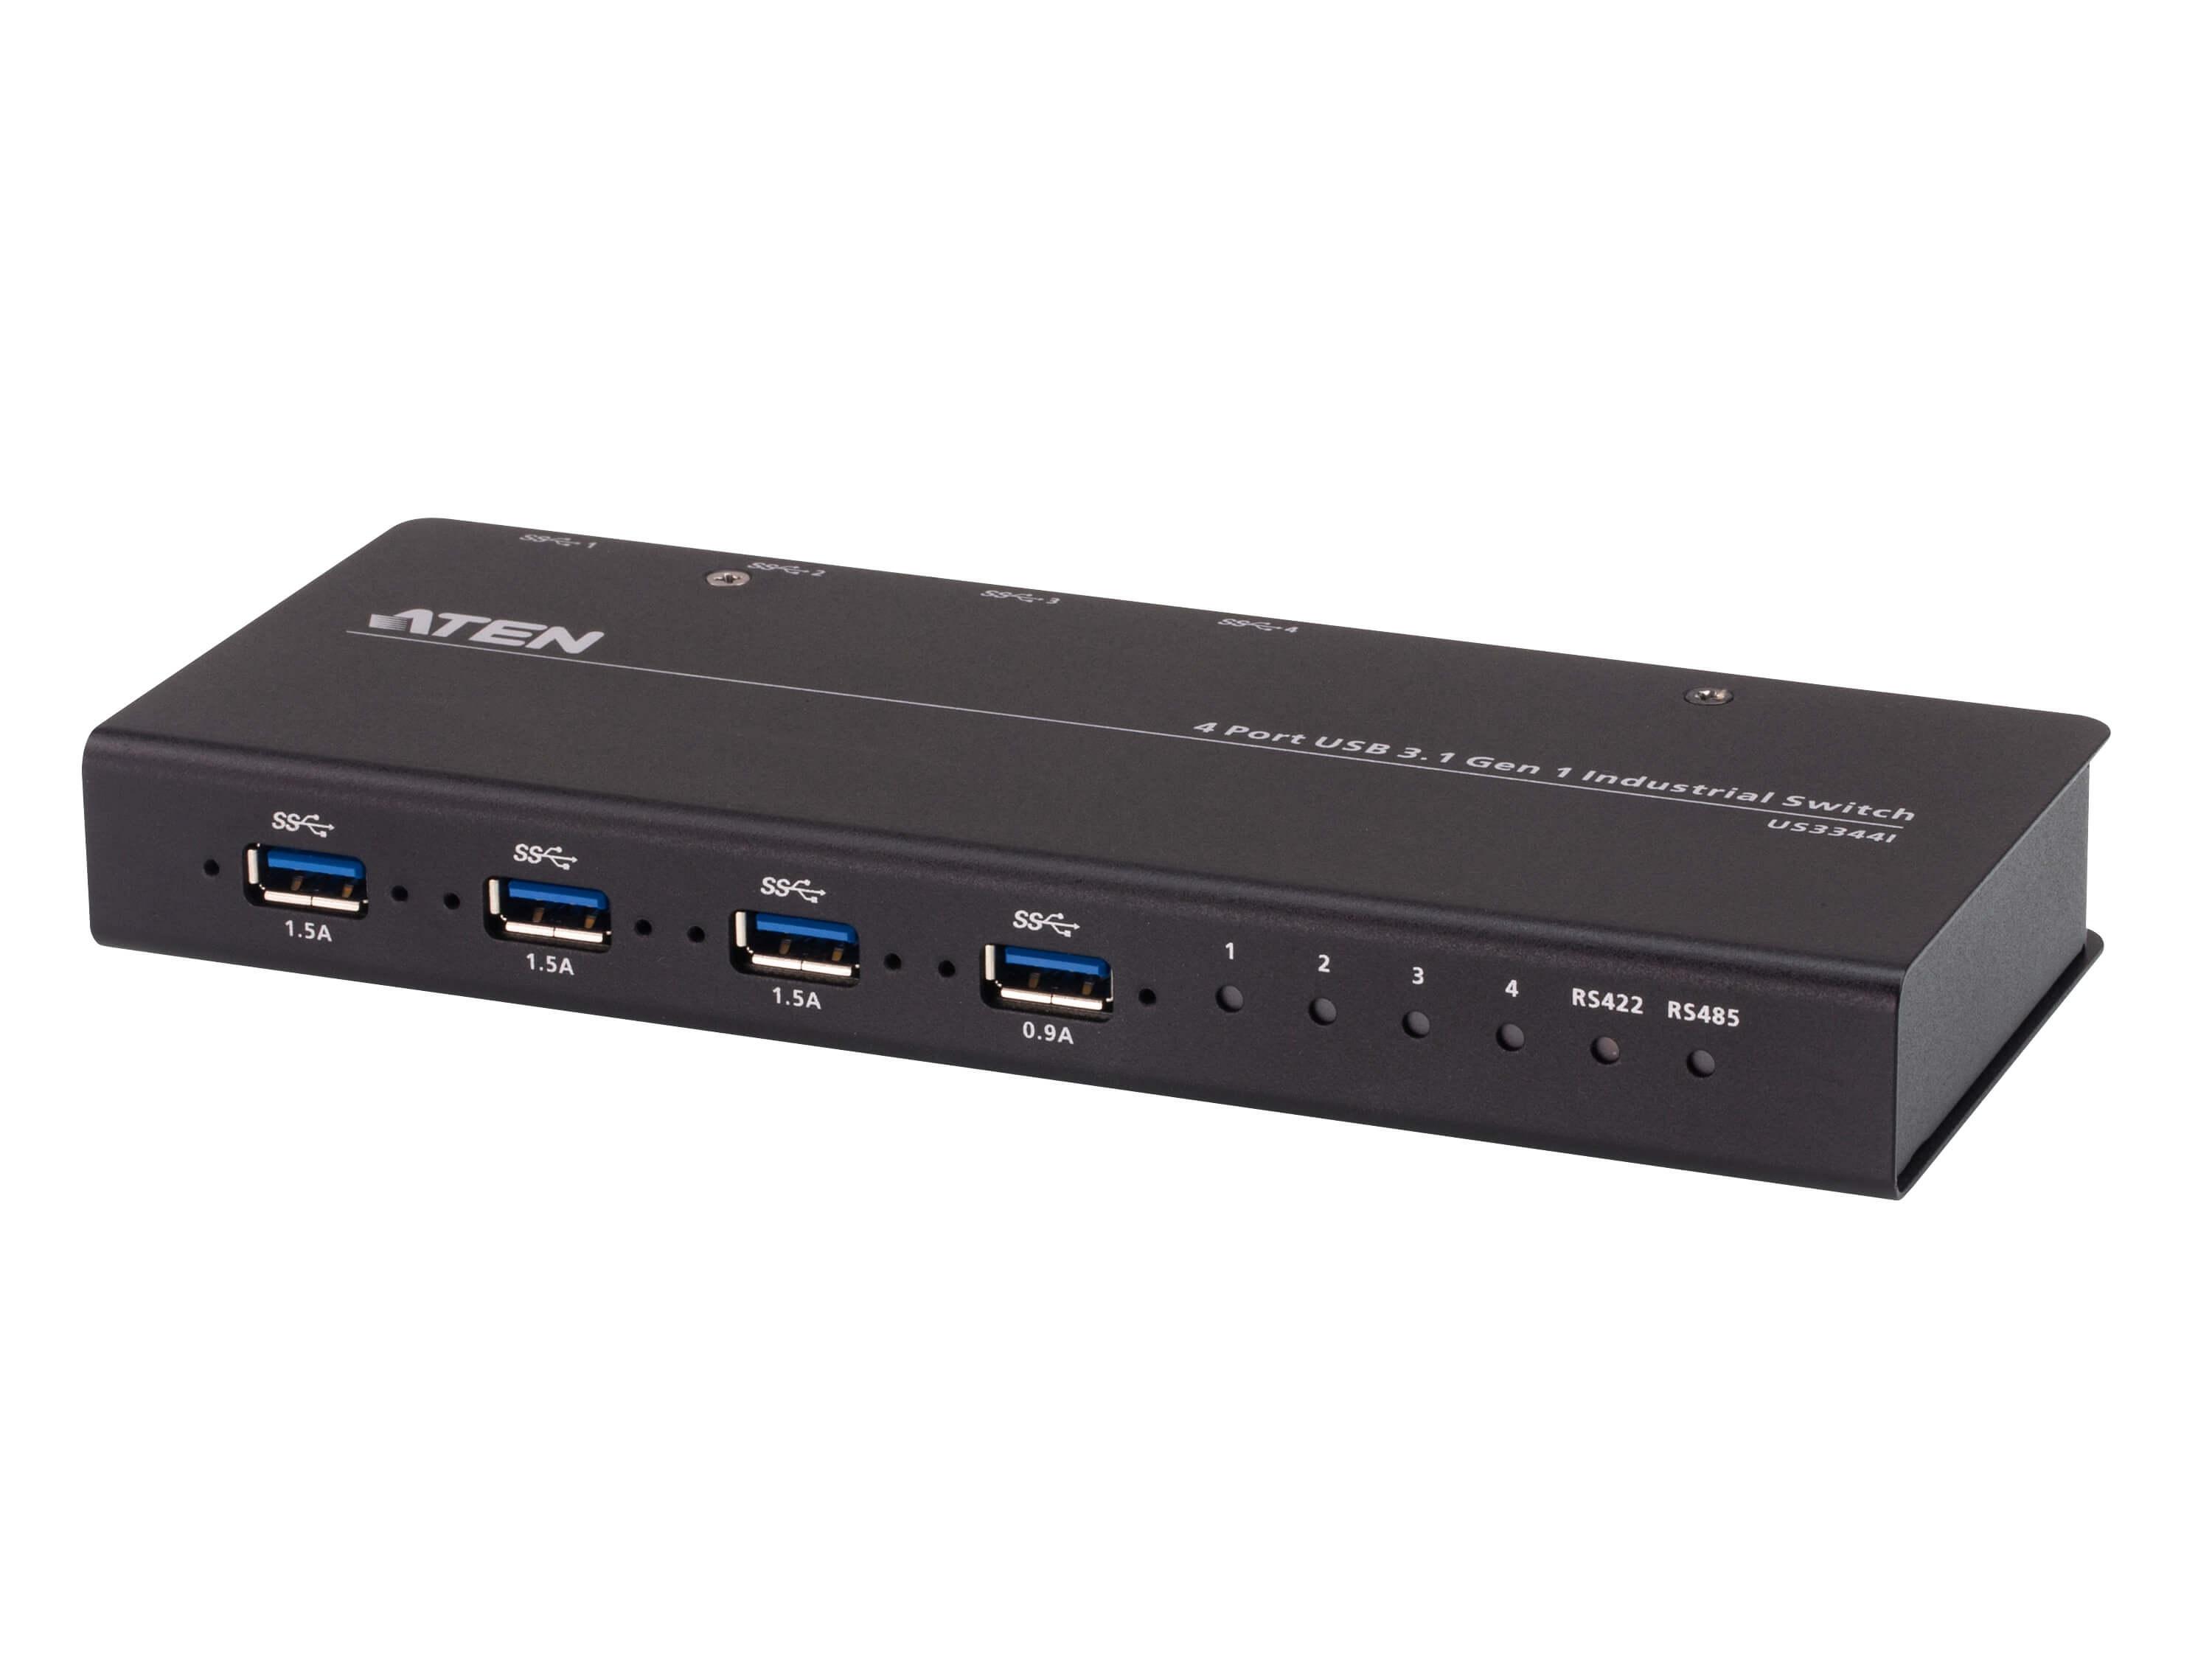 US3344I 4x4 USB 3.1 Gen 1 Industrial Hub Switch by Aten